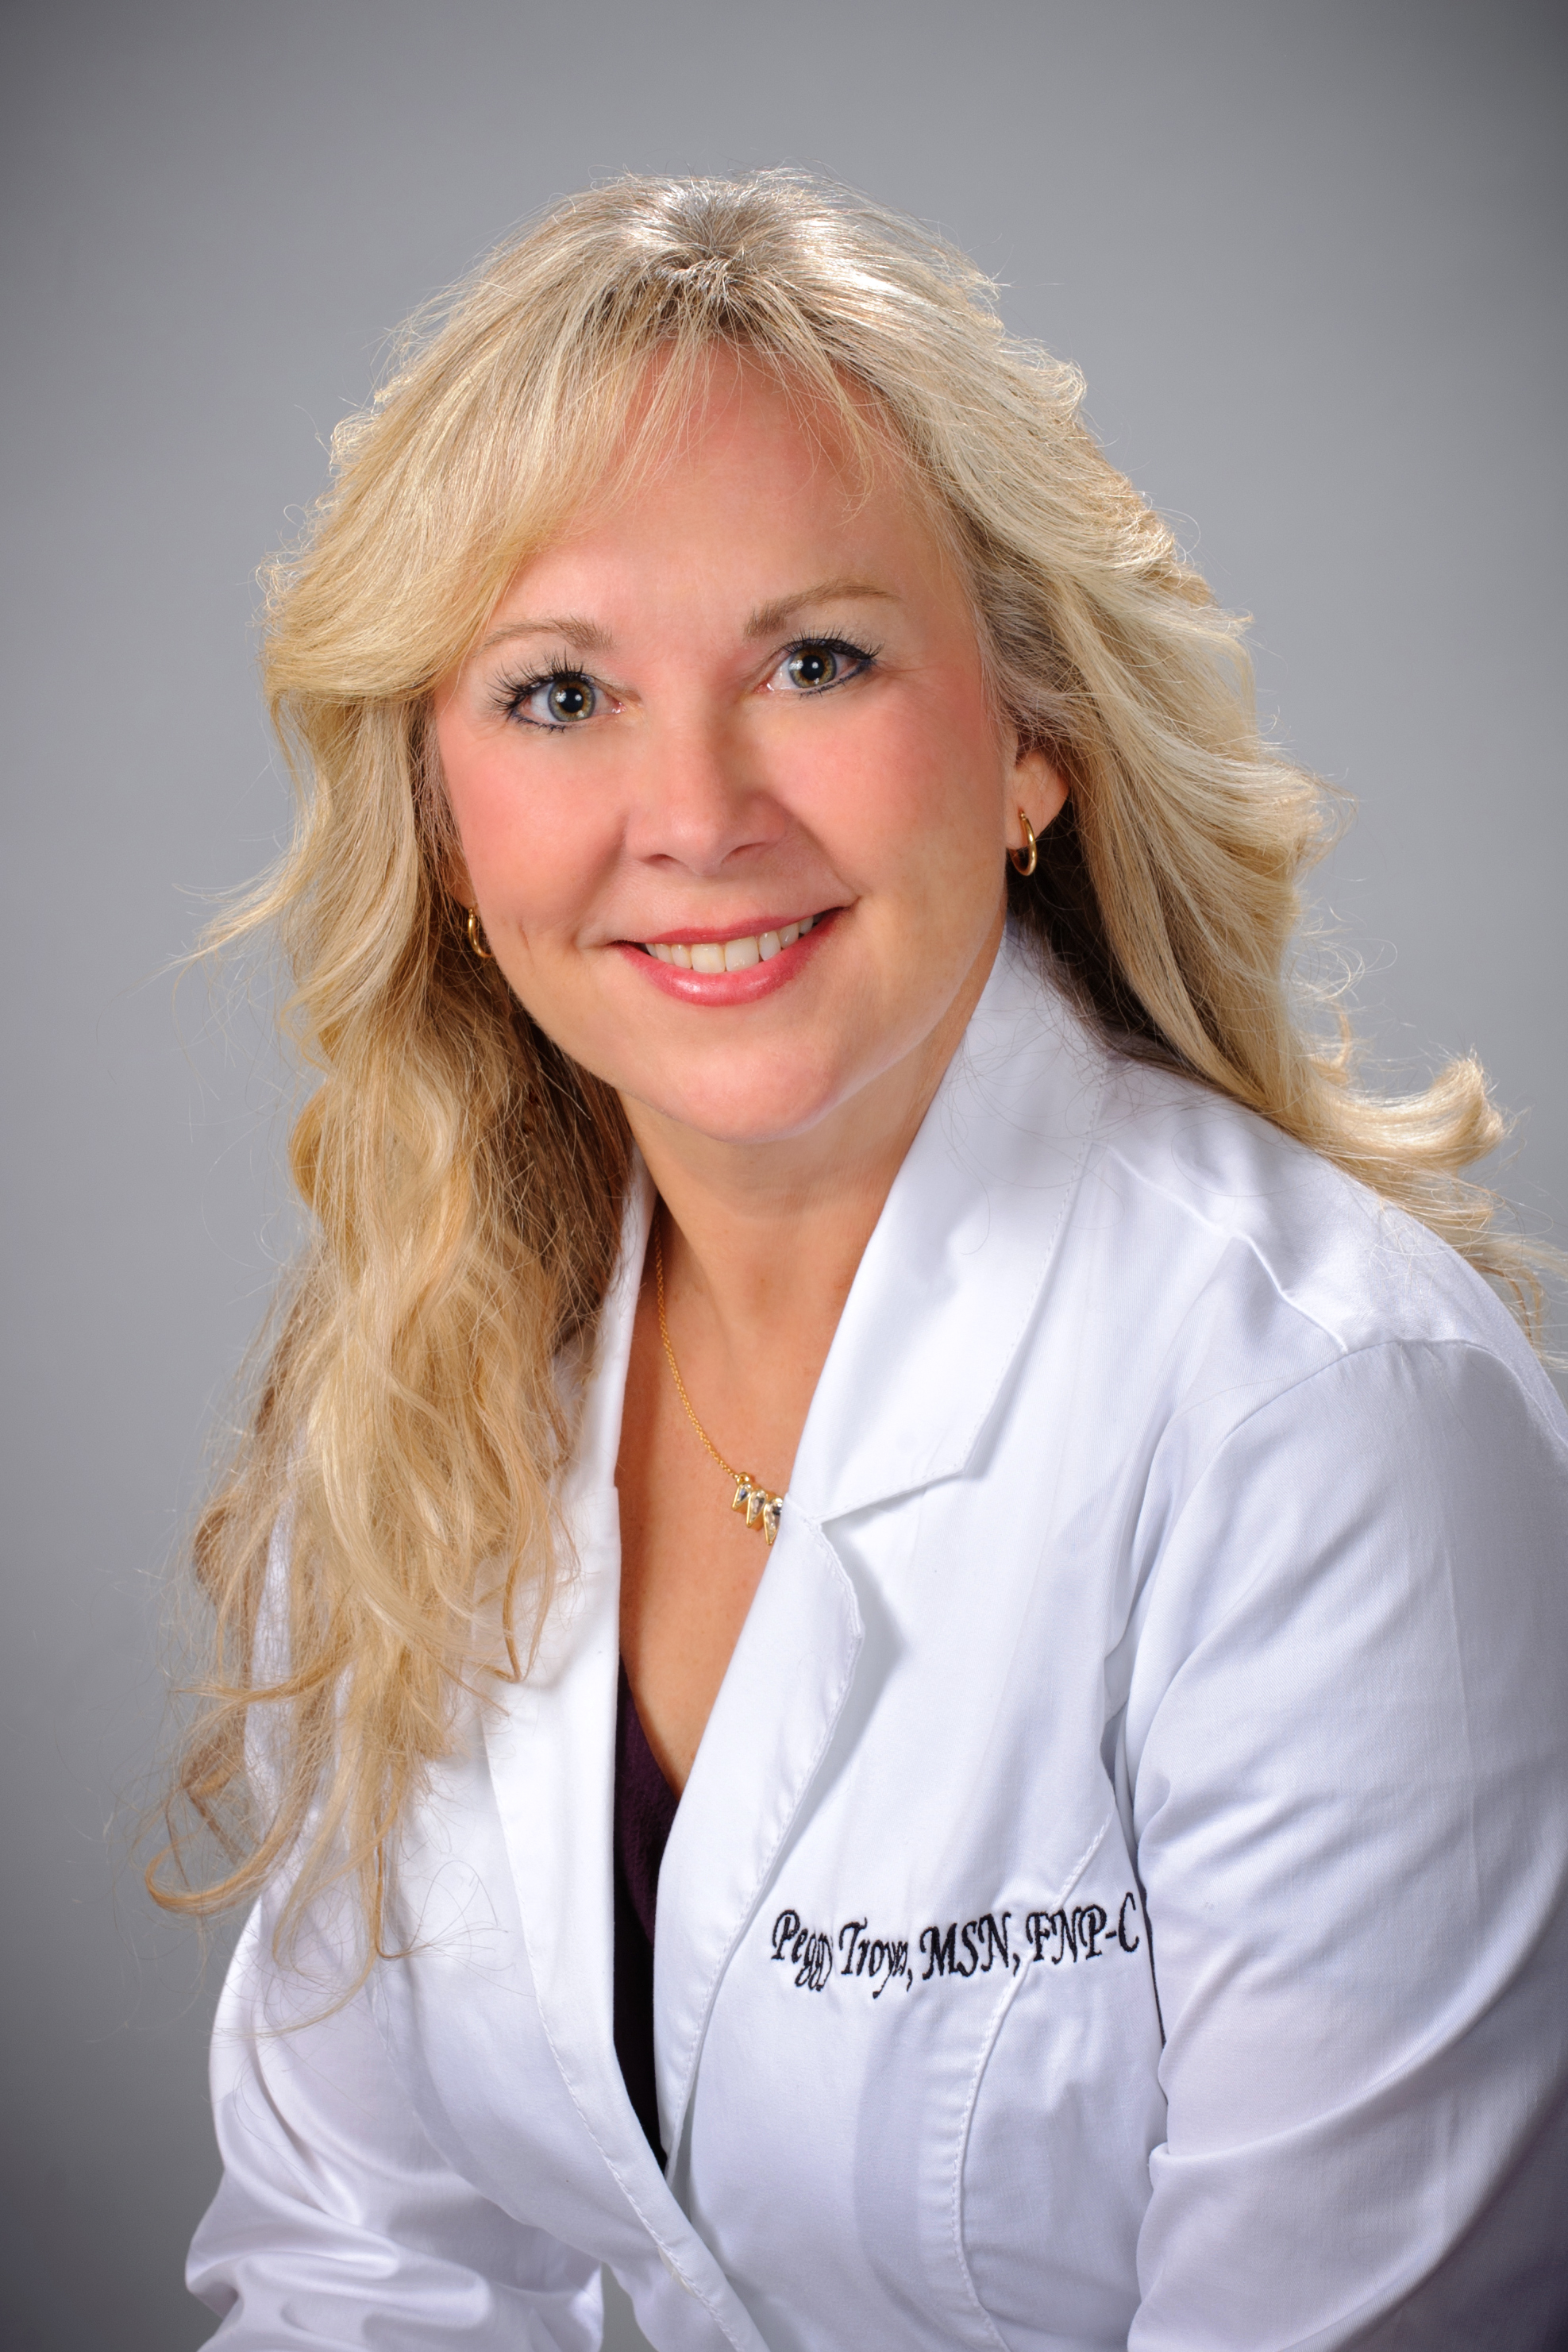 Peggy Troyer, Nurse Practitioner